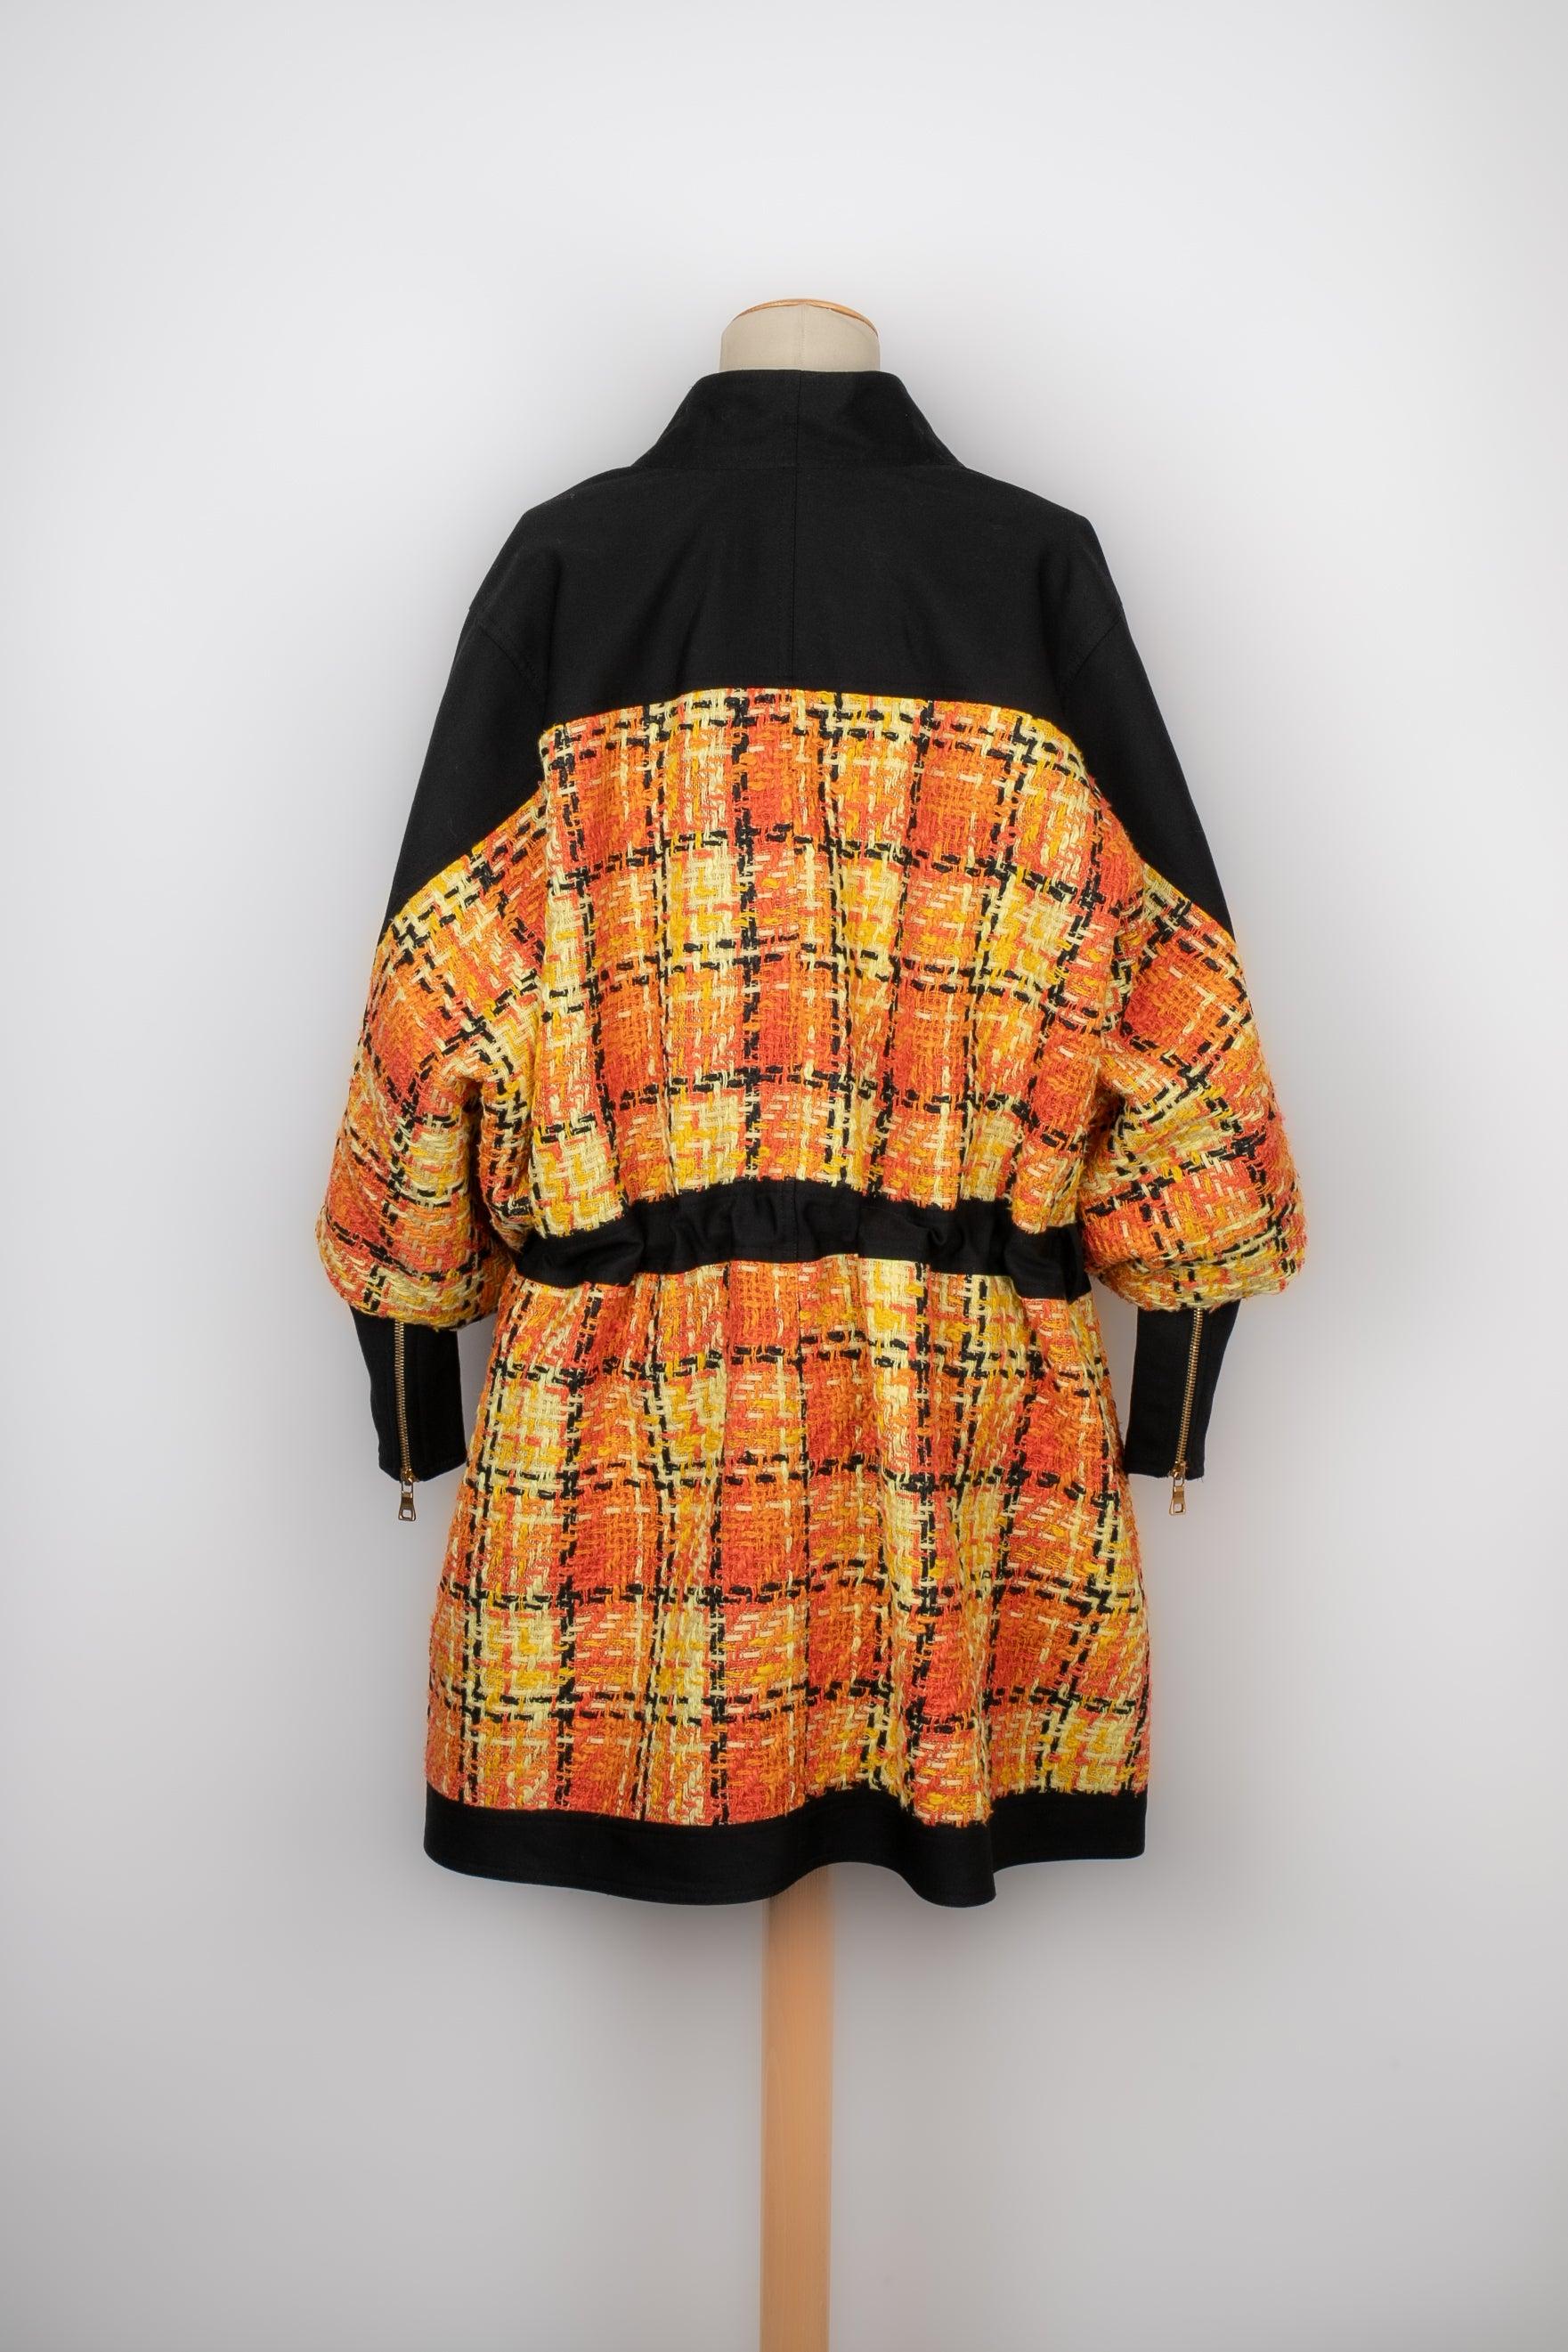 Balmain Tweed Coat in Orange and Yellow Tones In Excellent Condition For Sale In SAINT-OUEN-SUR-SEINE, FR